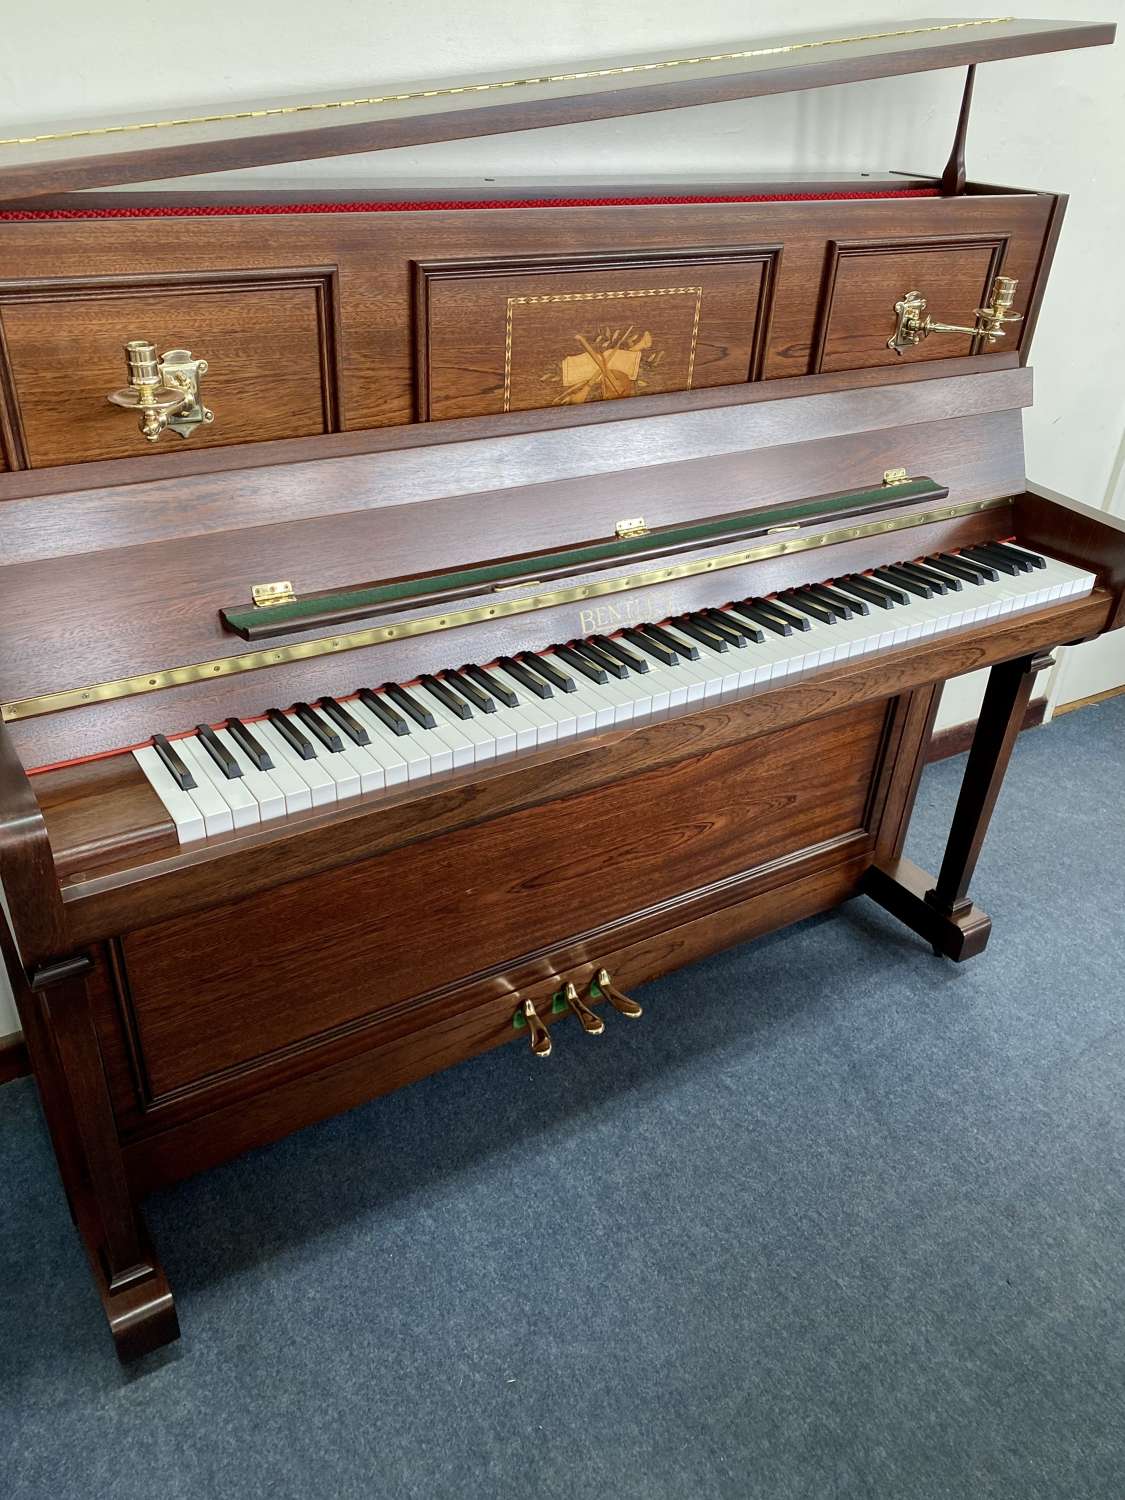 Bentley Esher piano for sale